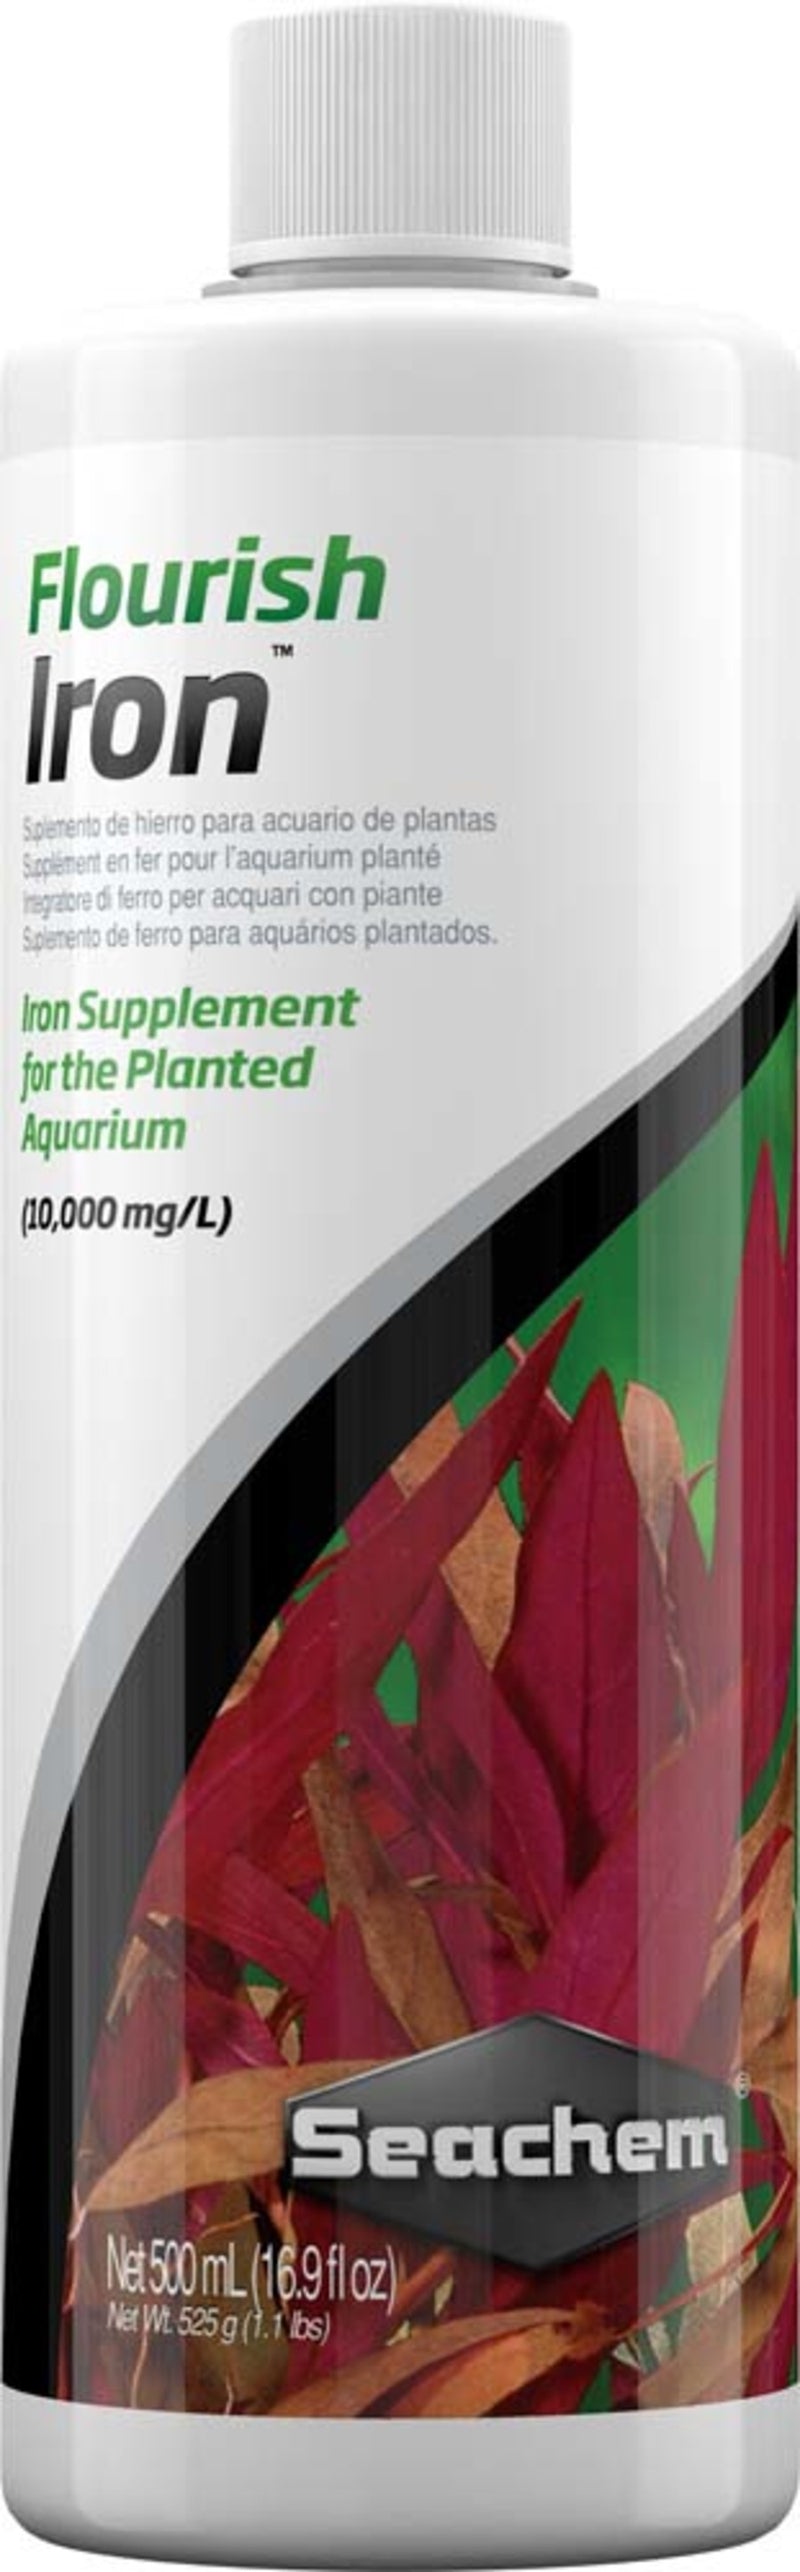 Seachem - Flourish Iron Plant Supplement